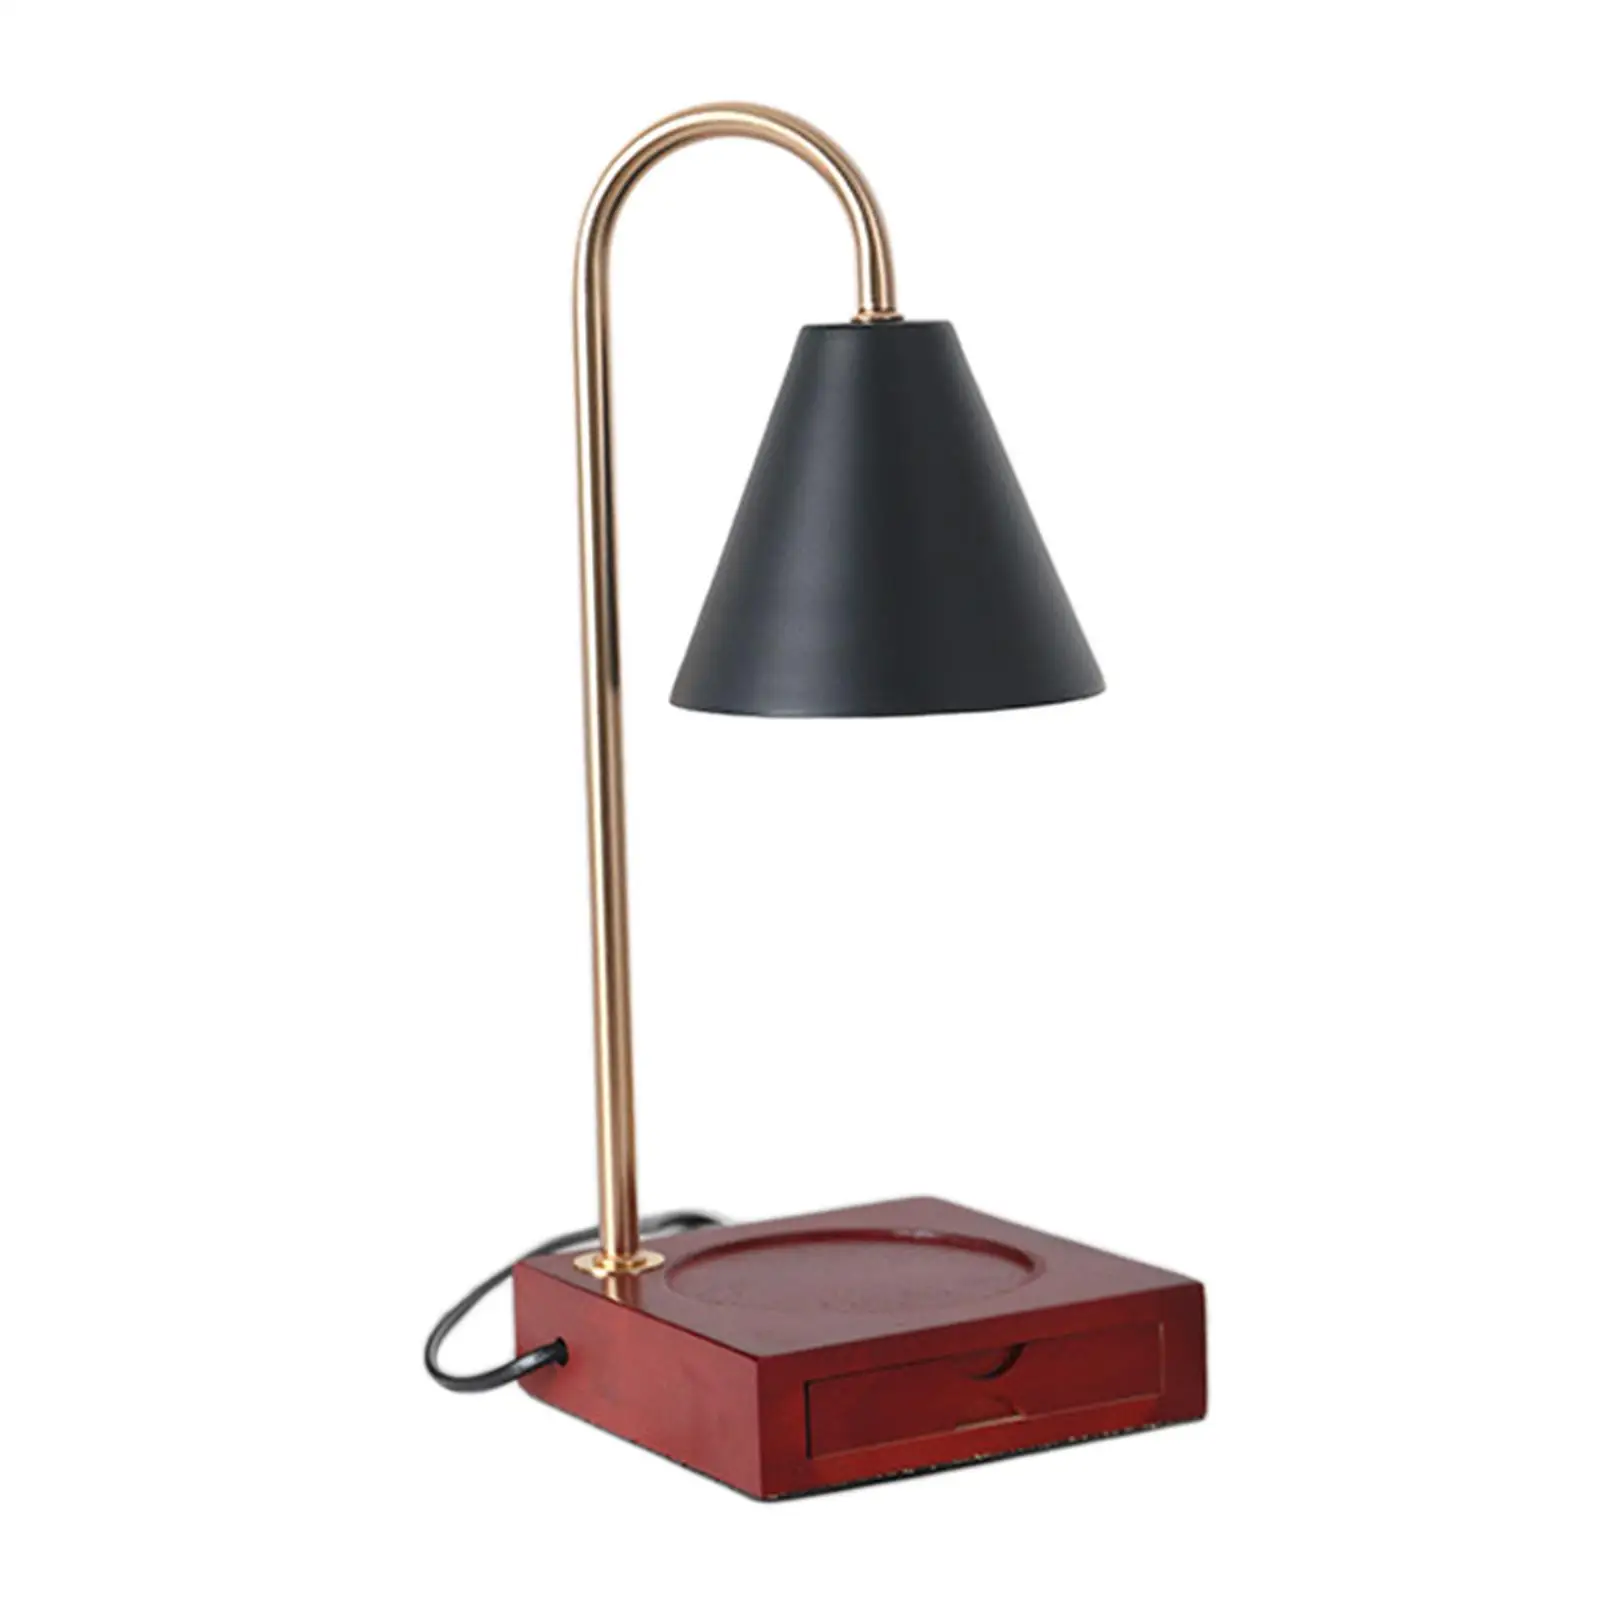 Candle Warmer Lamp Burner Melt Lamp Base Dimmable Heater No Flame Ornaments for Living Room Tabletop Bedside Home Bedroom